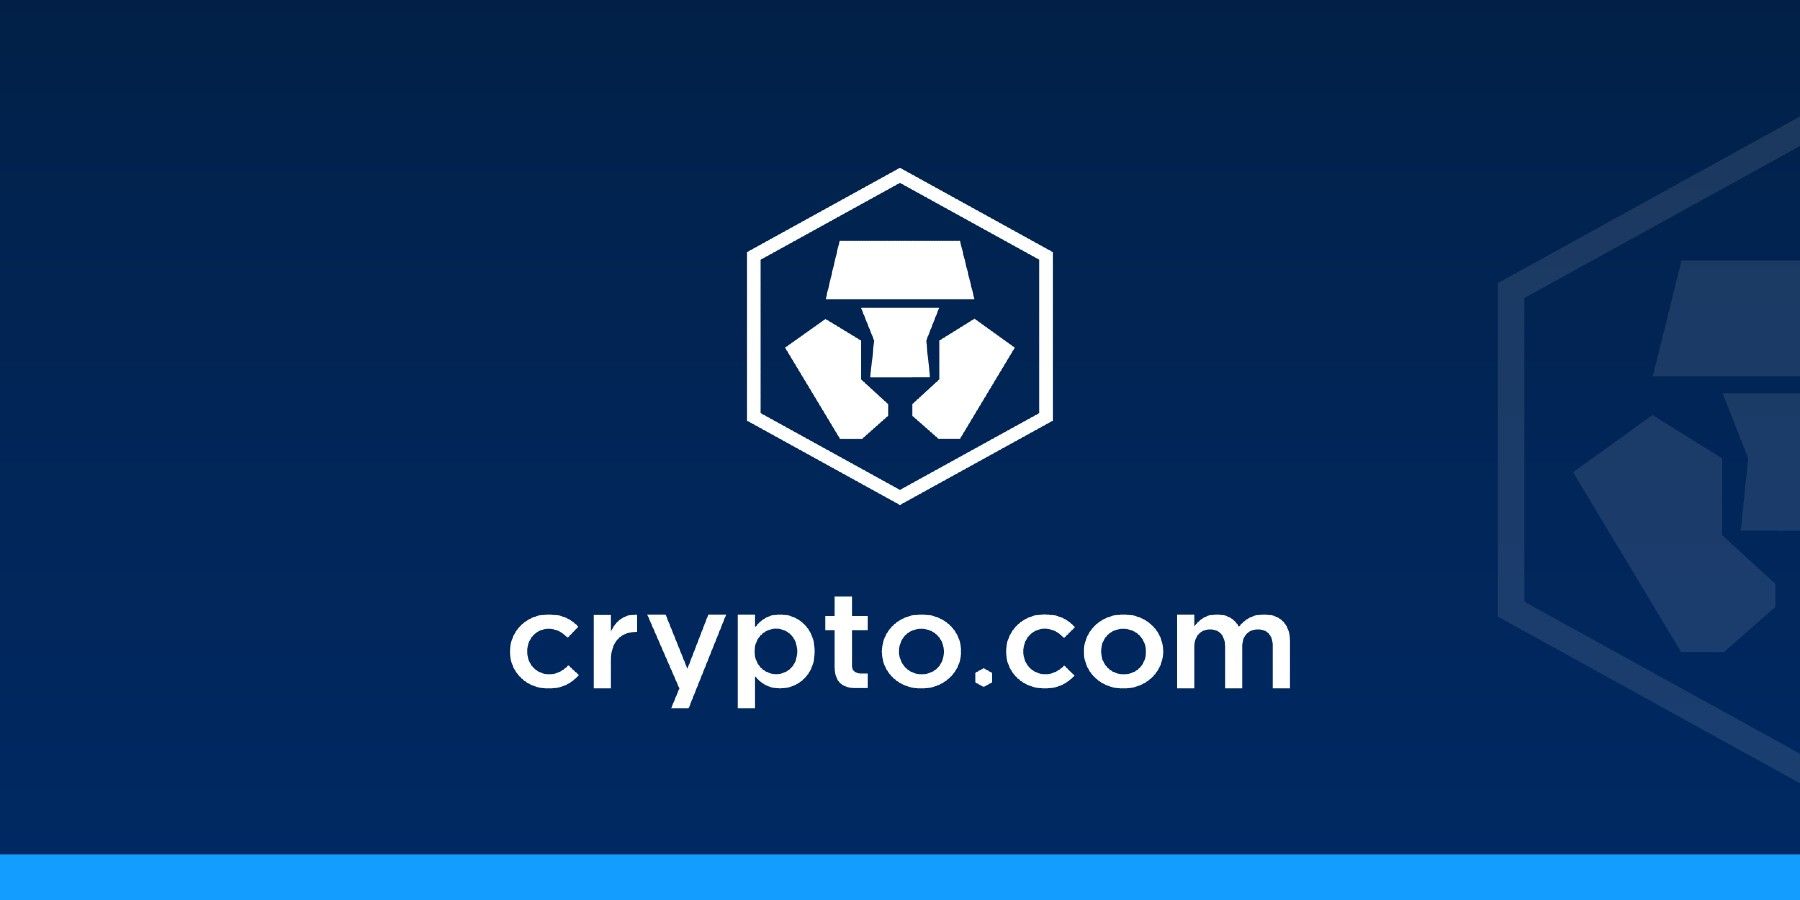 Crypto.com cryptocurrency